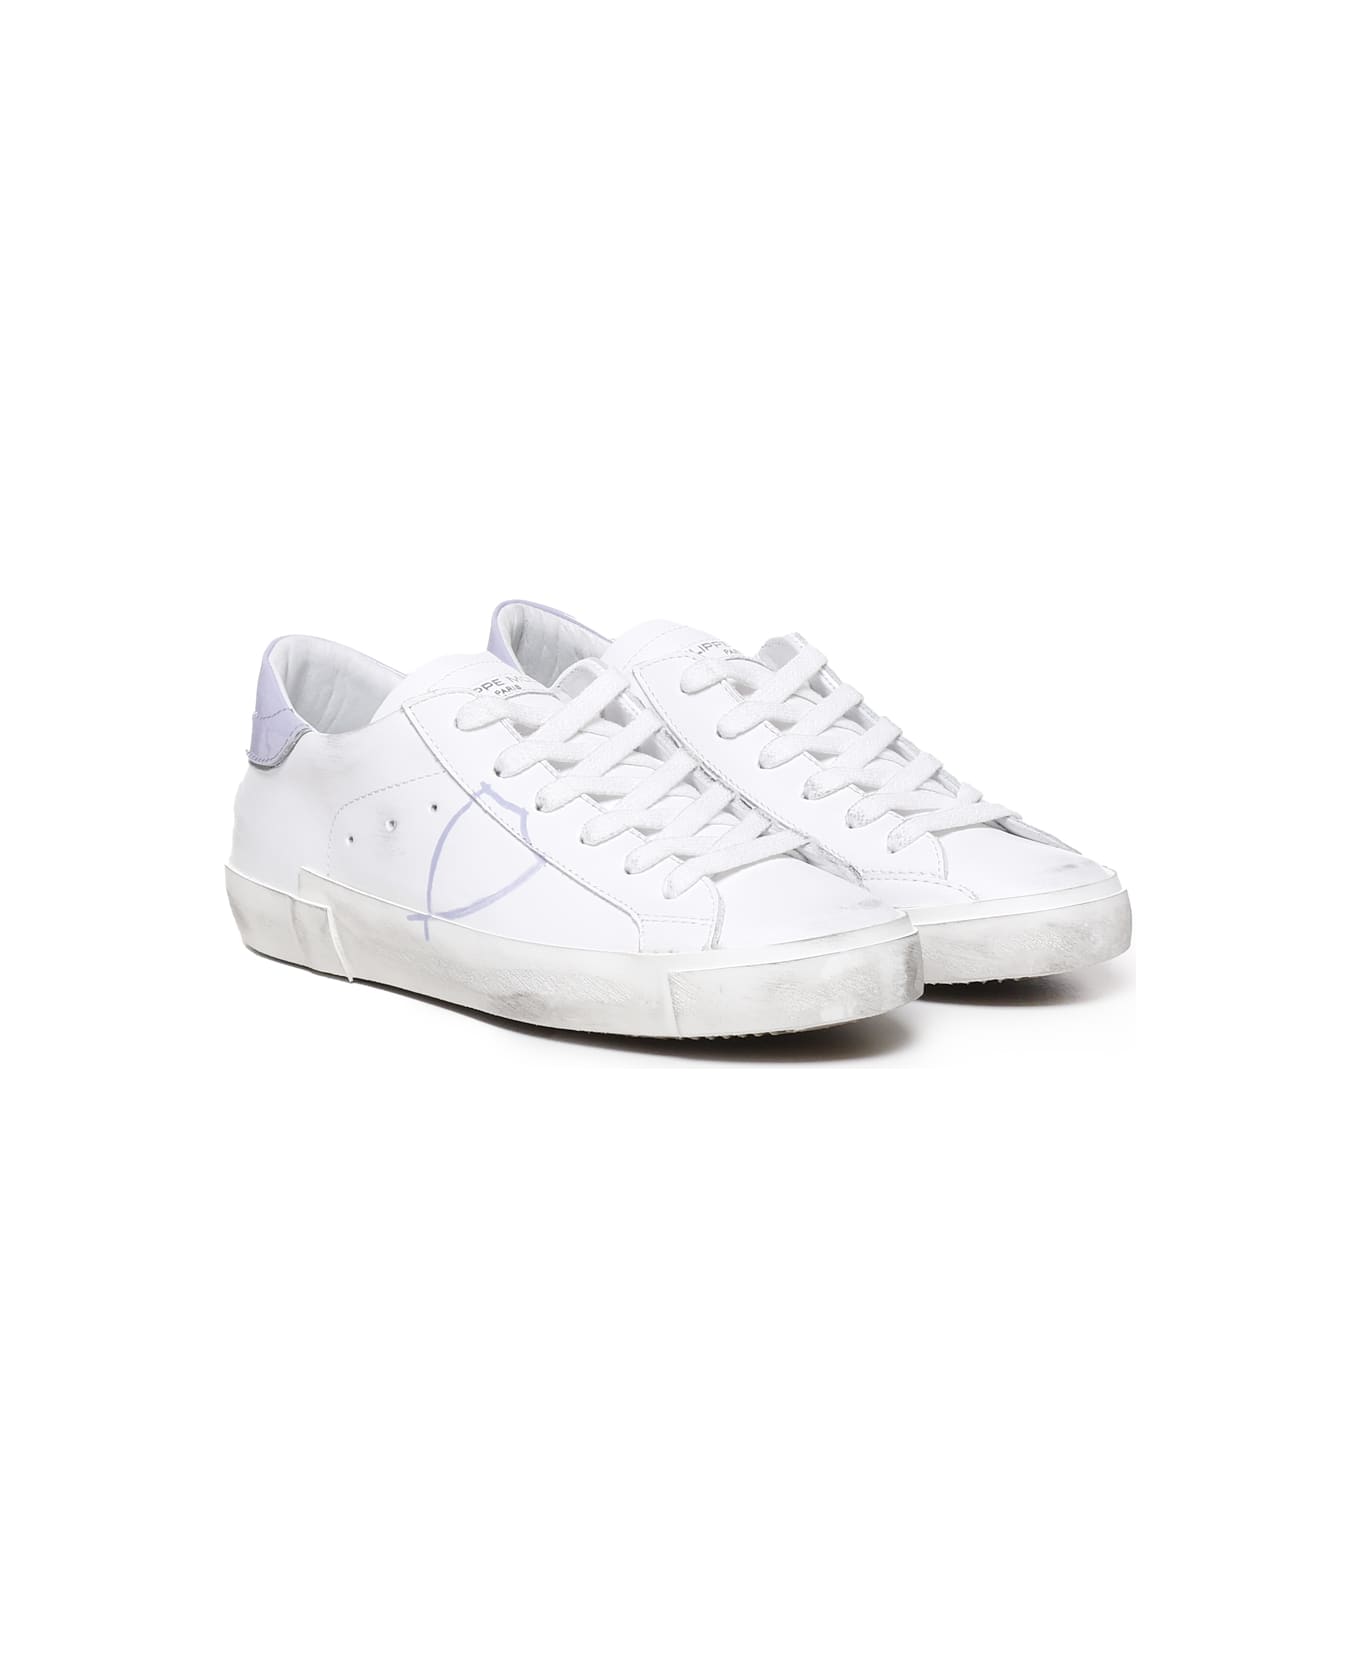 Philippe Model Prsx Casual Leather Sneaker - White, lillac